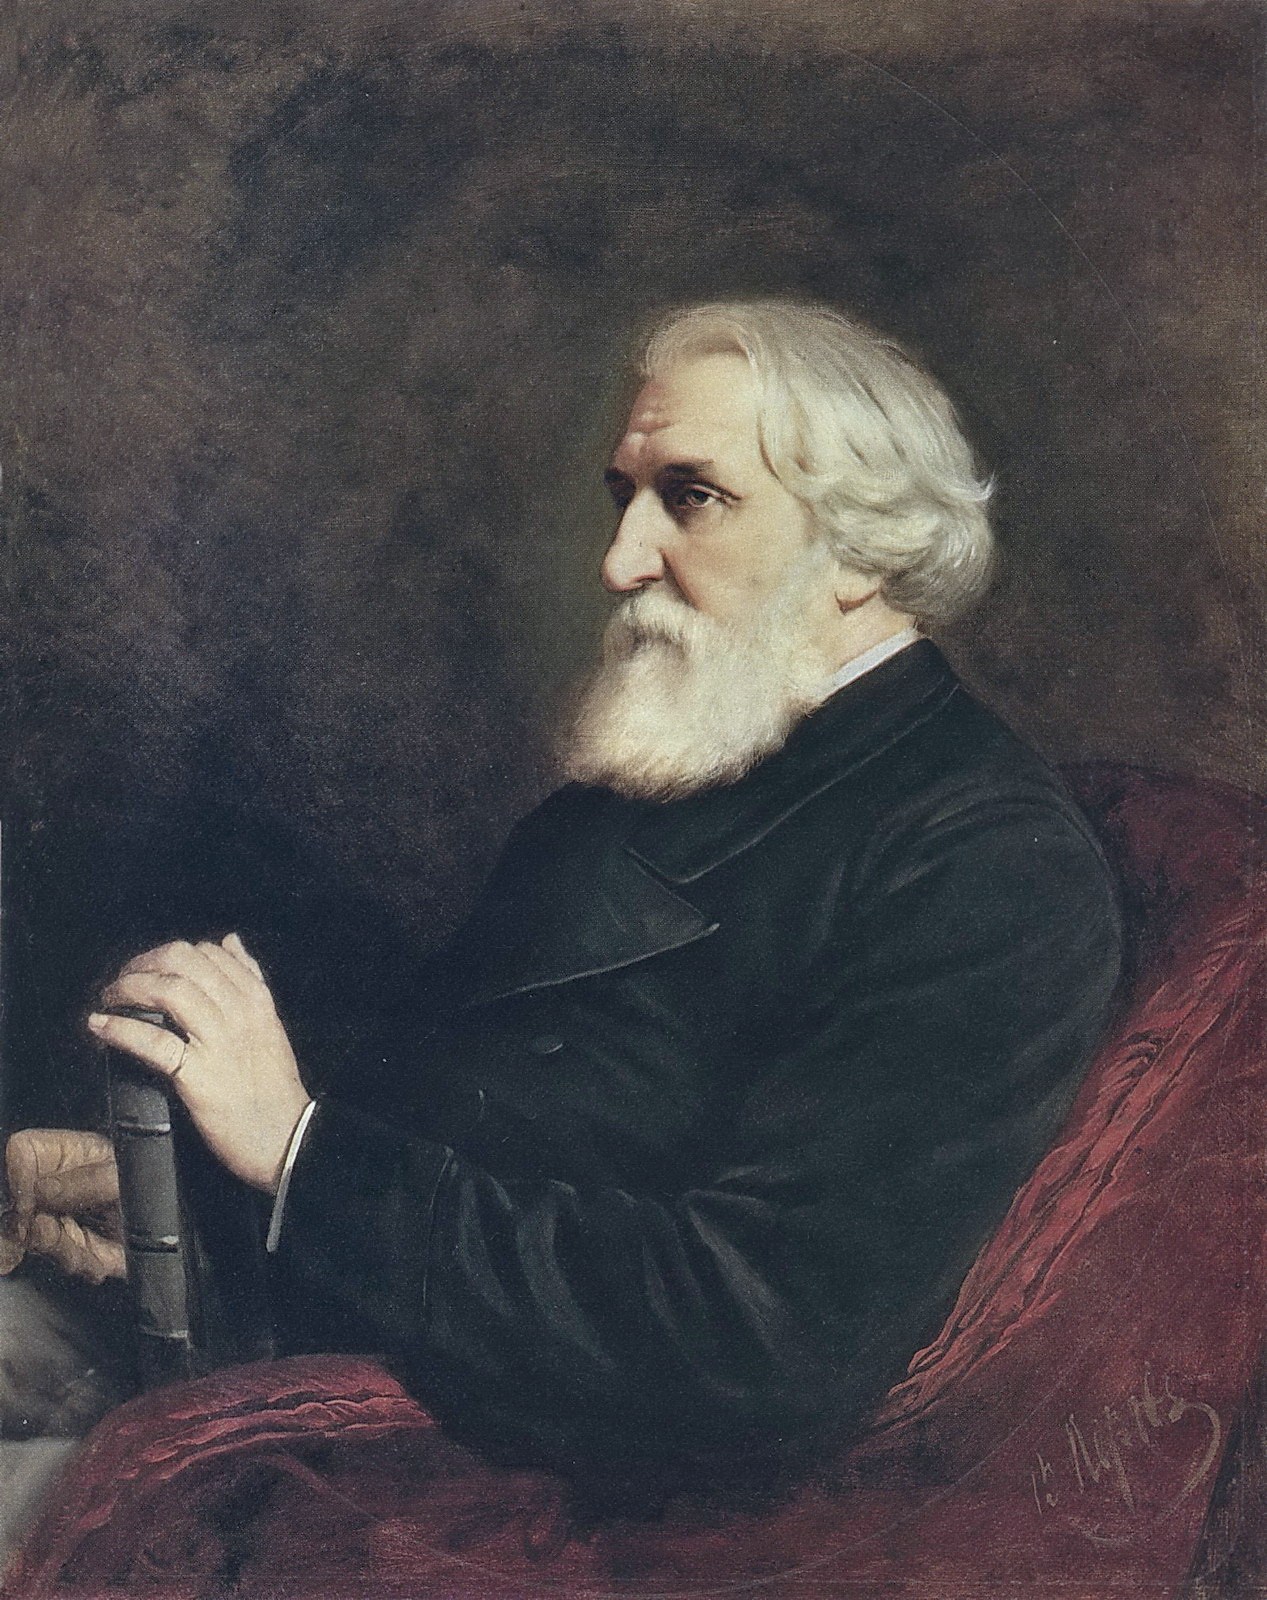 Vasily+Perov-1833-1882 (30).jpg